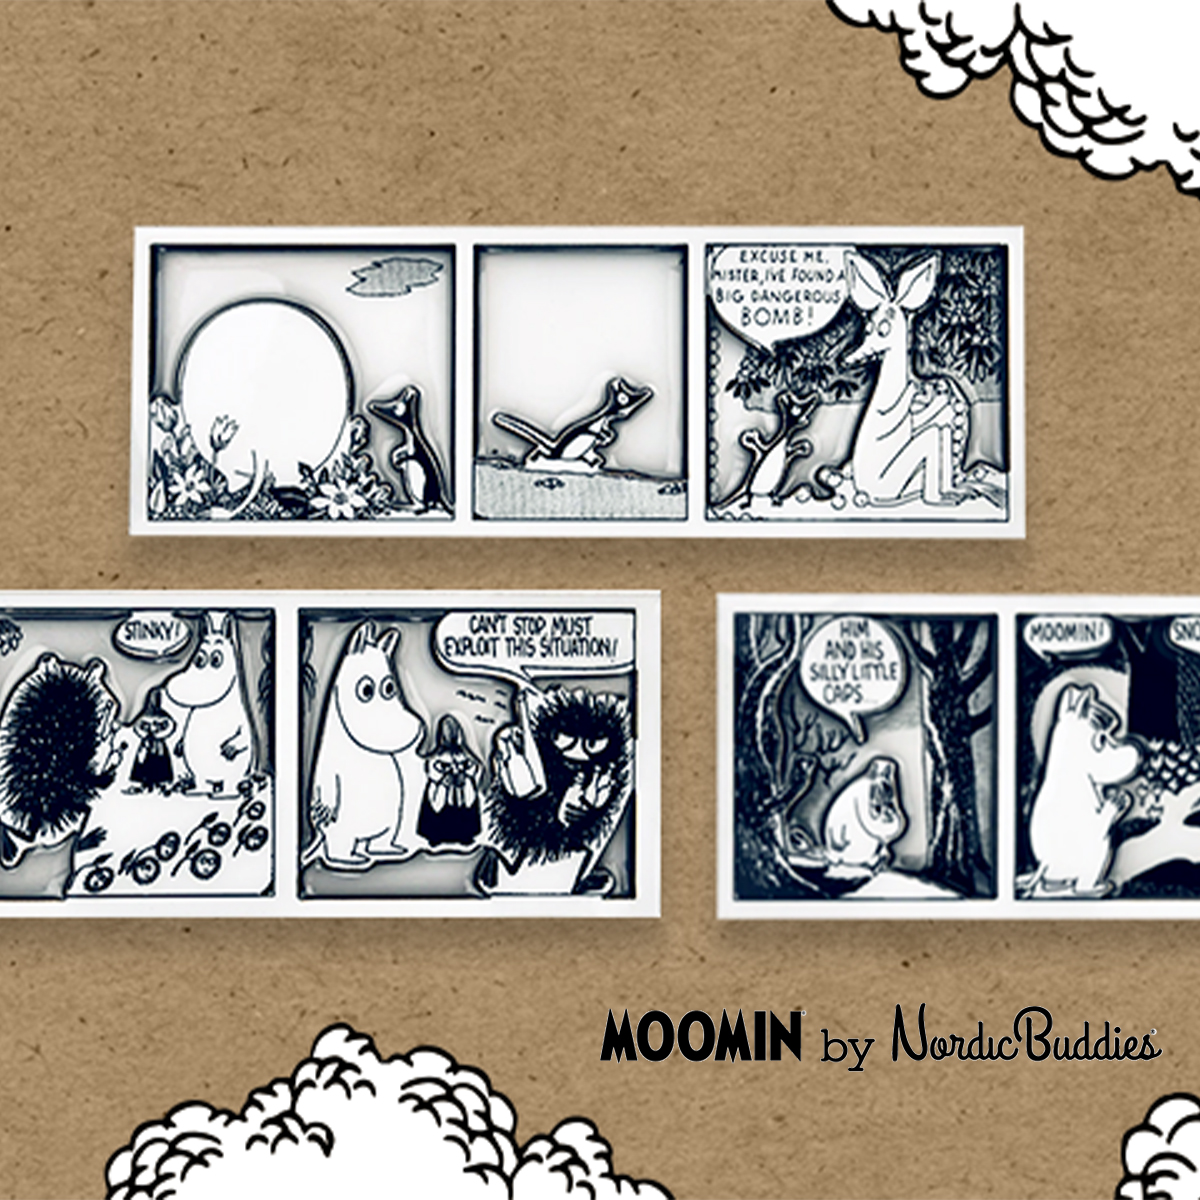 【NordicBuddies】ノルディックバディズ ムーミンシリーズ マグネット